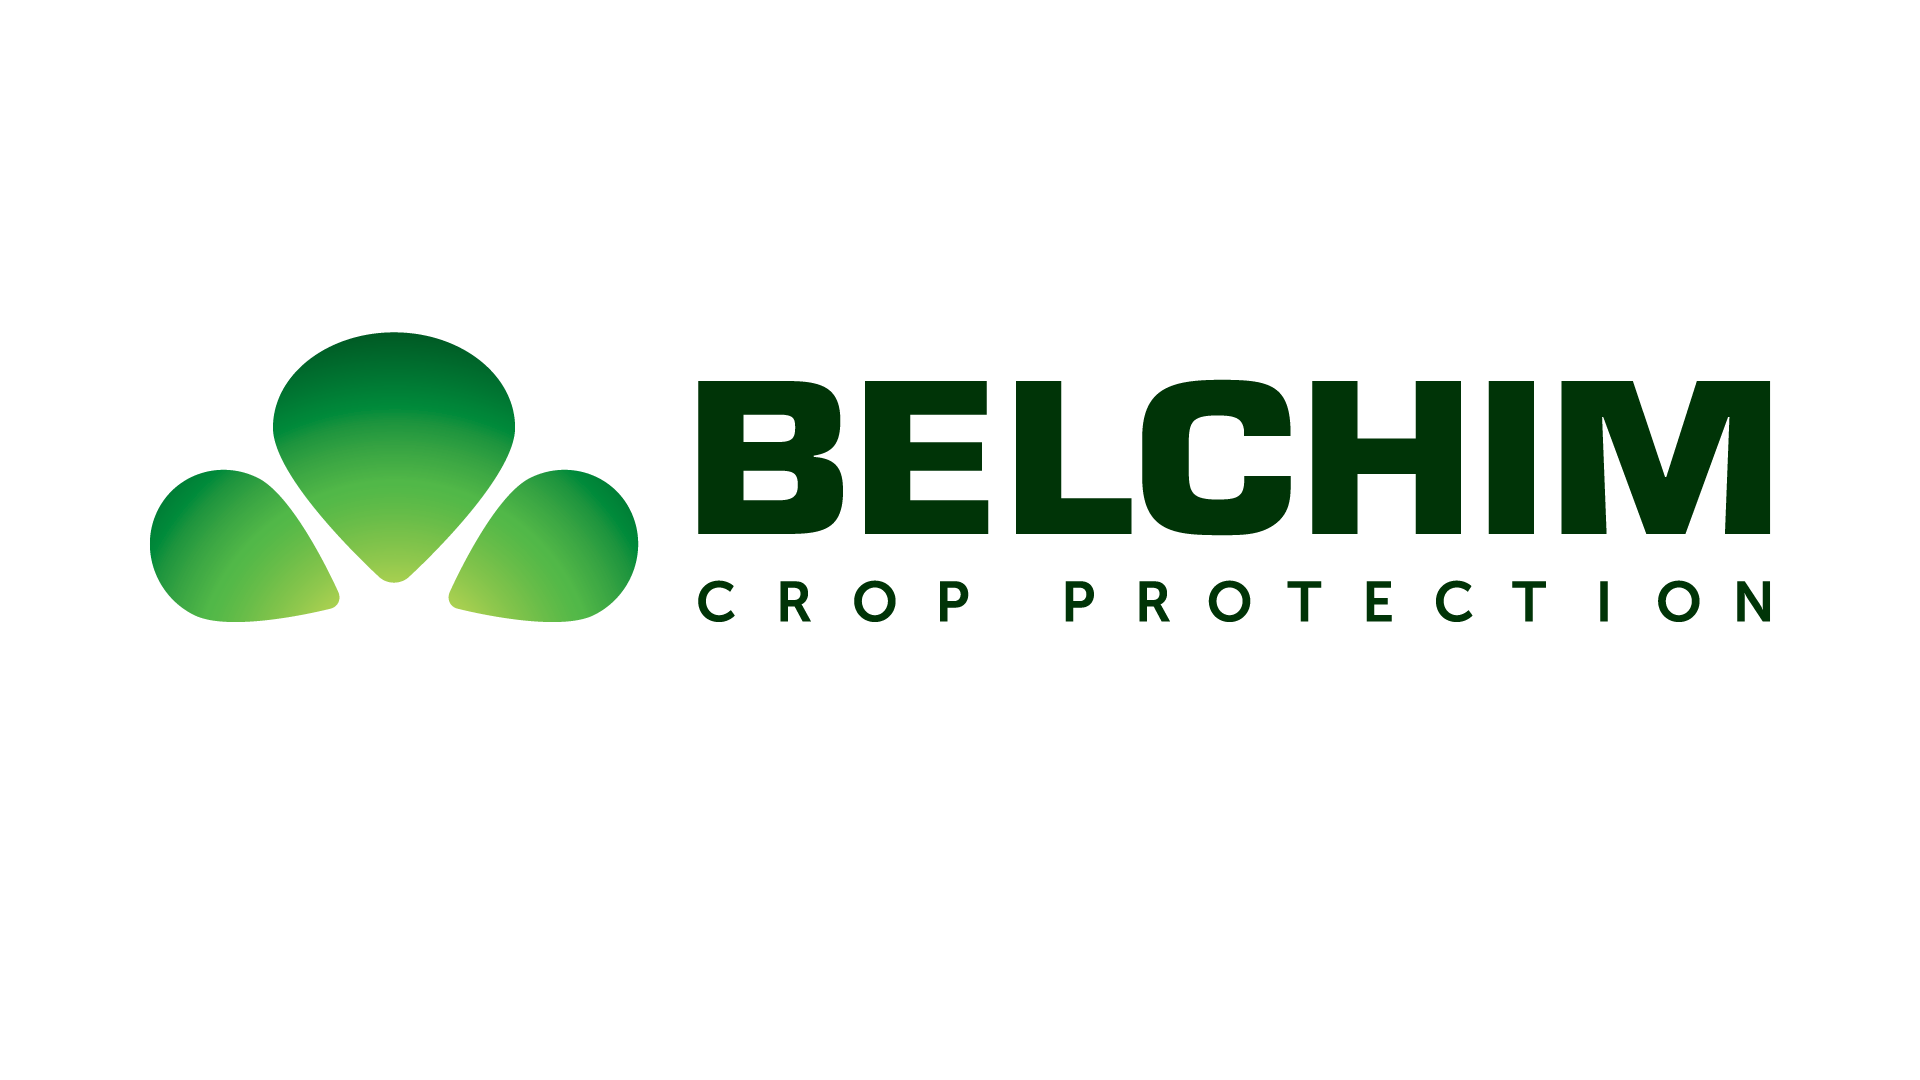 Belchim Crop Protectioin logo 2 - Vegetable Growers News